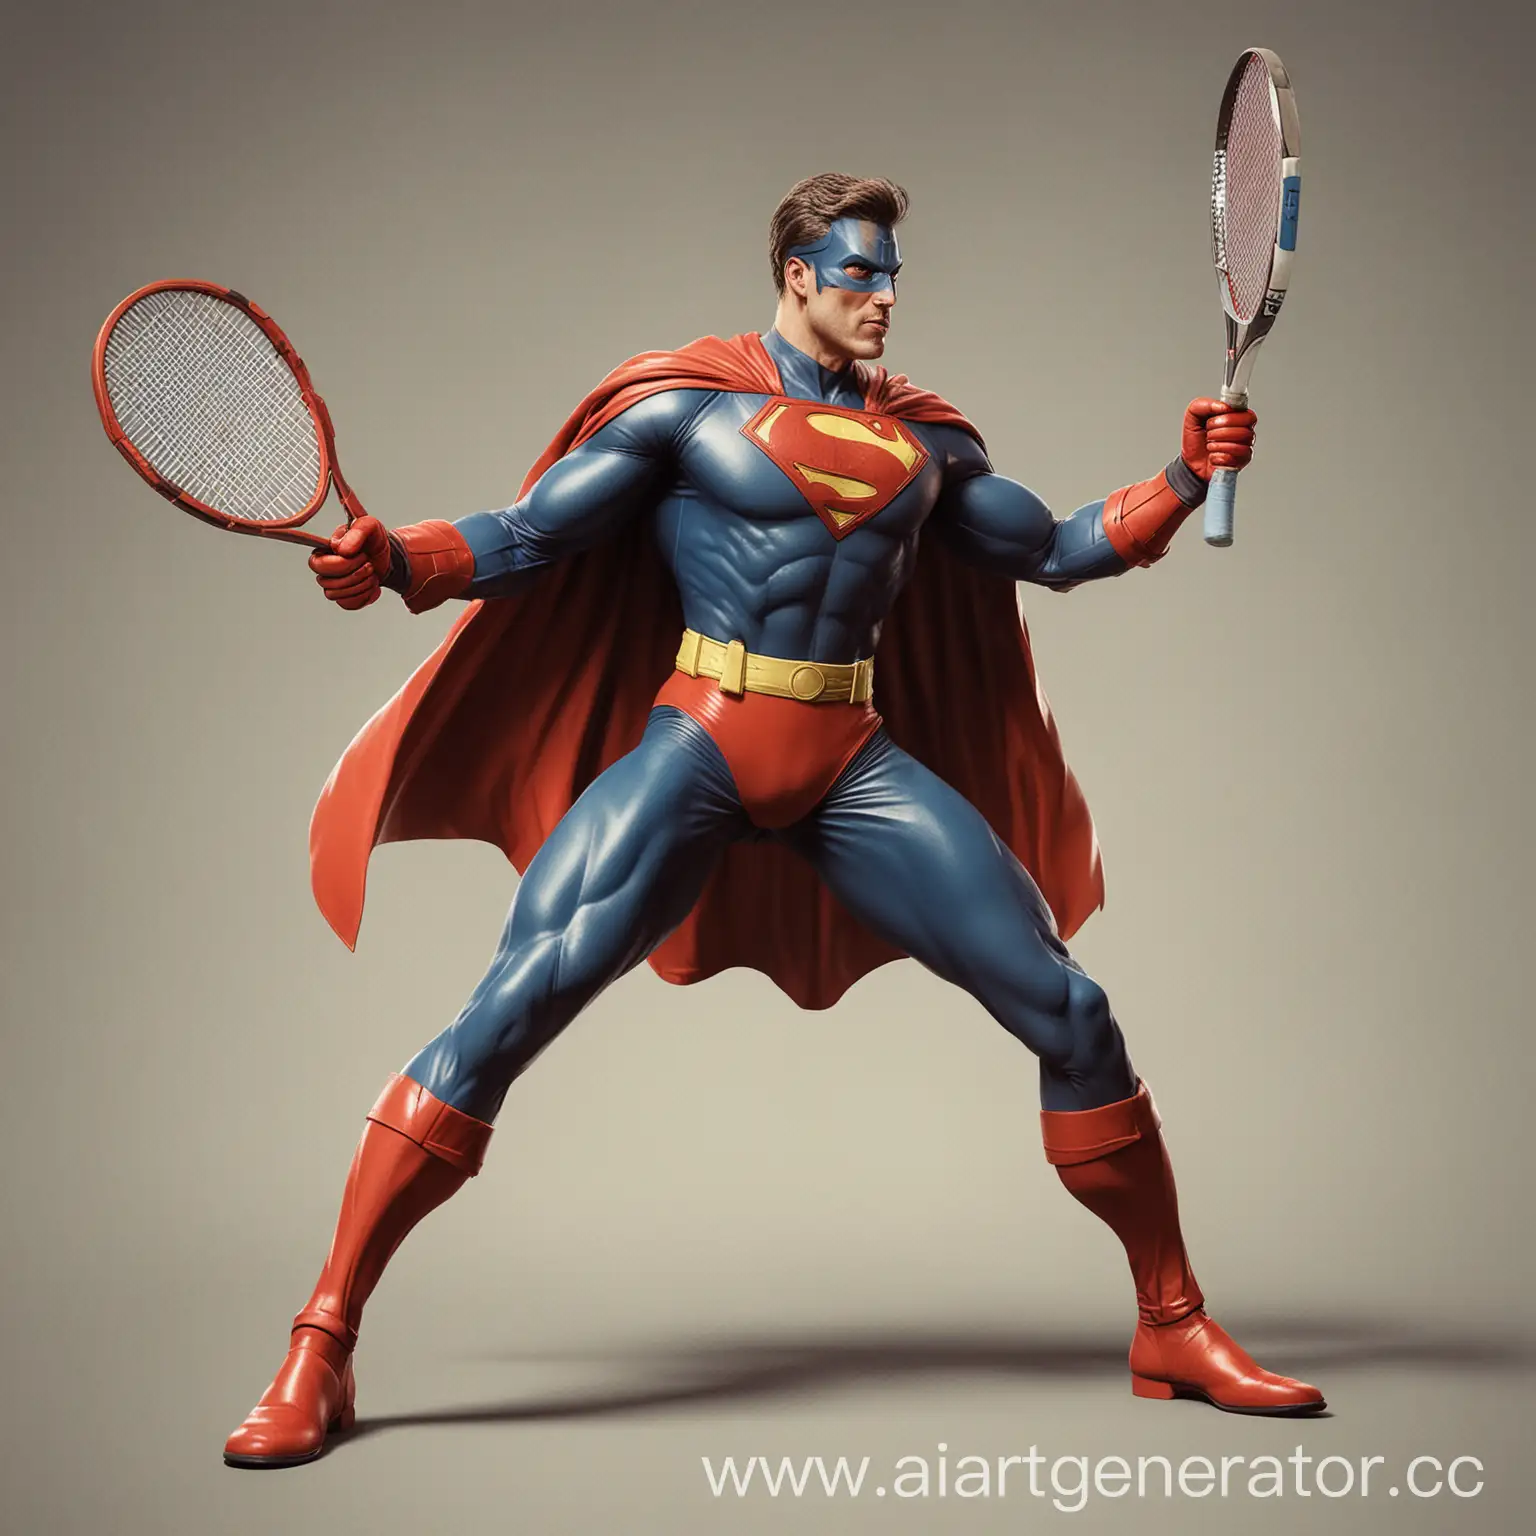 Superhero-RacquetMan-with-Rackets-Defending-the-City